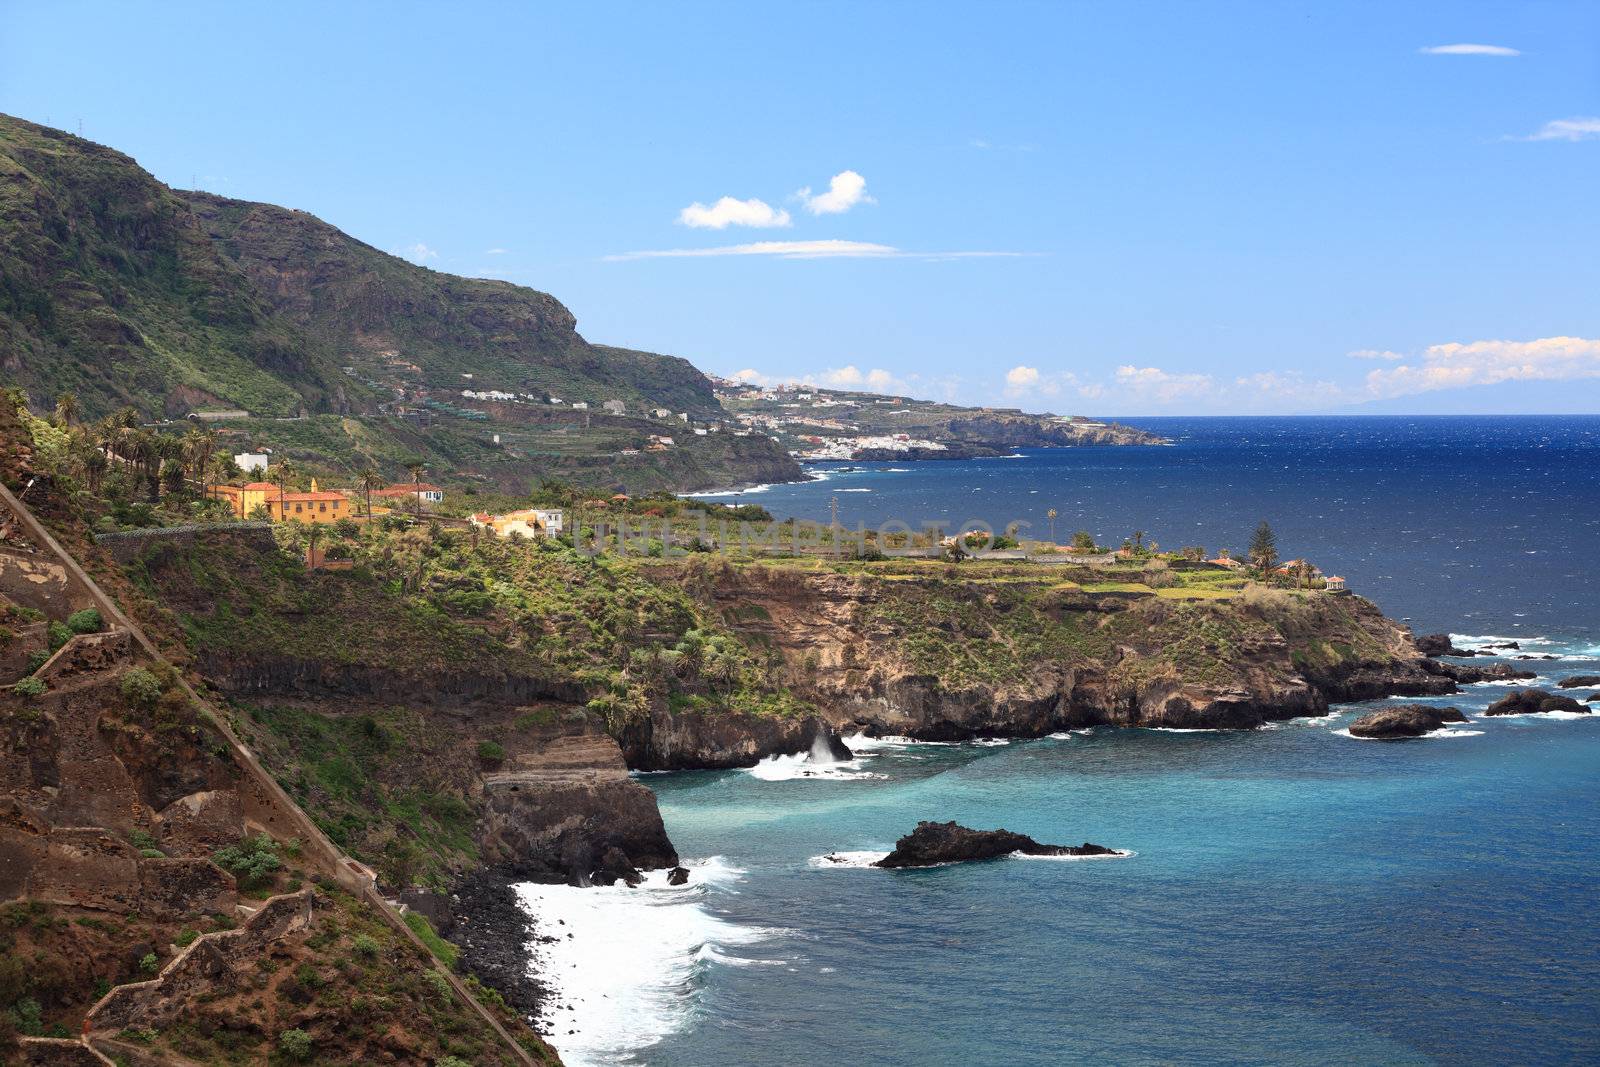 Tenerife - coastline landscape near Puerto de la Cruz in Orotava. Photo from hiking path La Rambla.